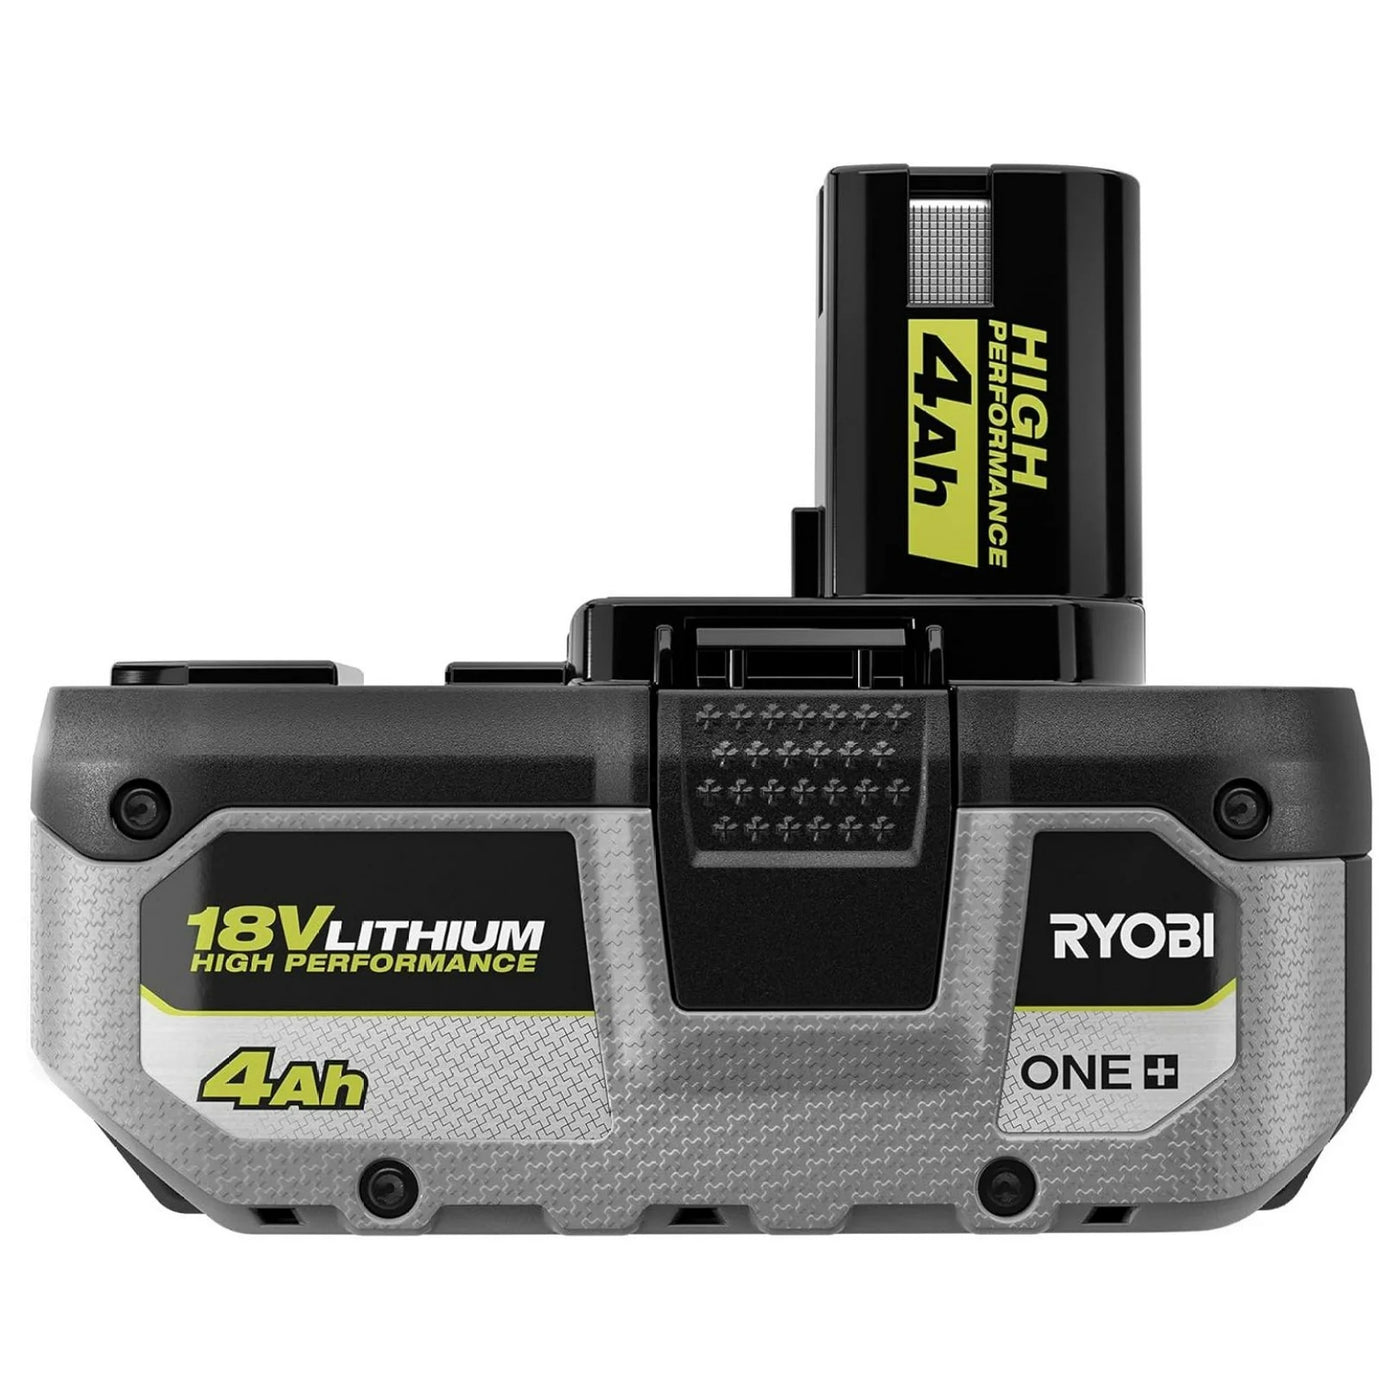 Ryobi ONE+ 18V PBP004 HIGH Performance Lithium-Ion 4.0 Ah Battery (2-Pack) - $70